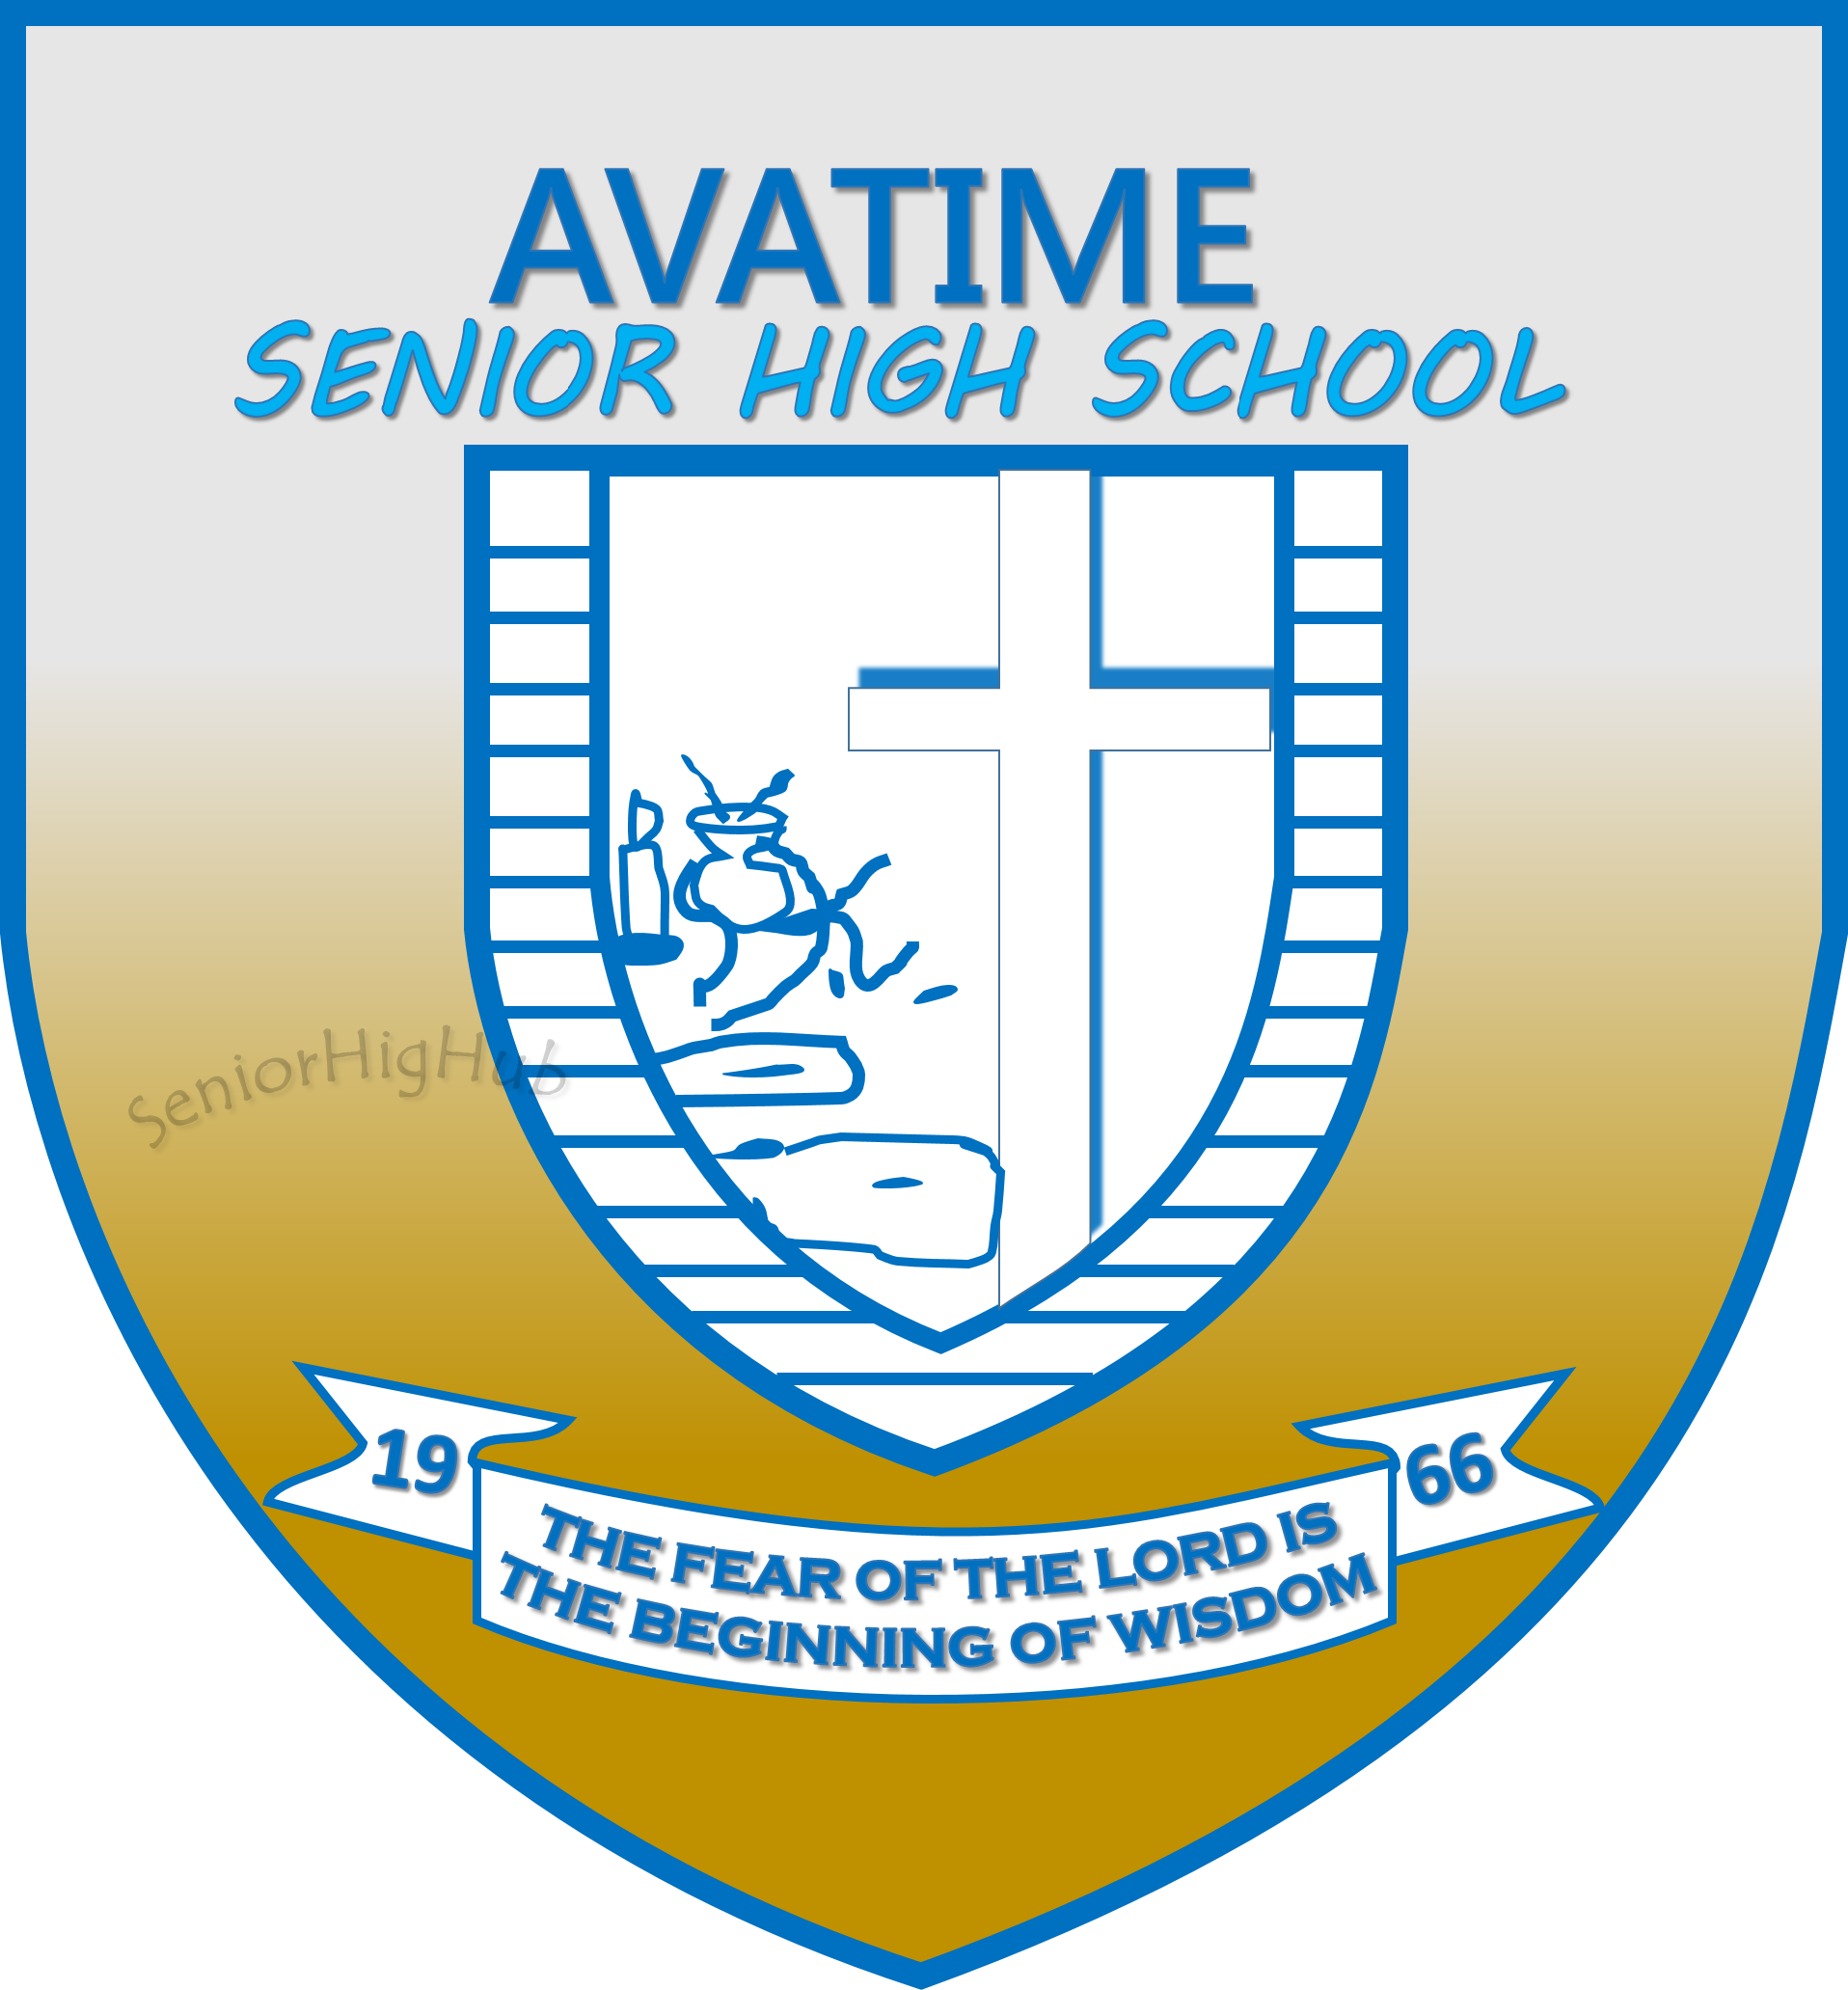 Avatime Senior High